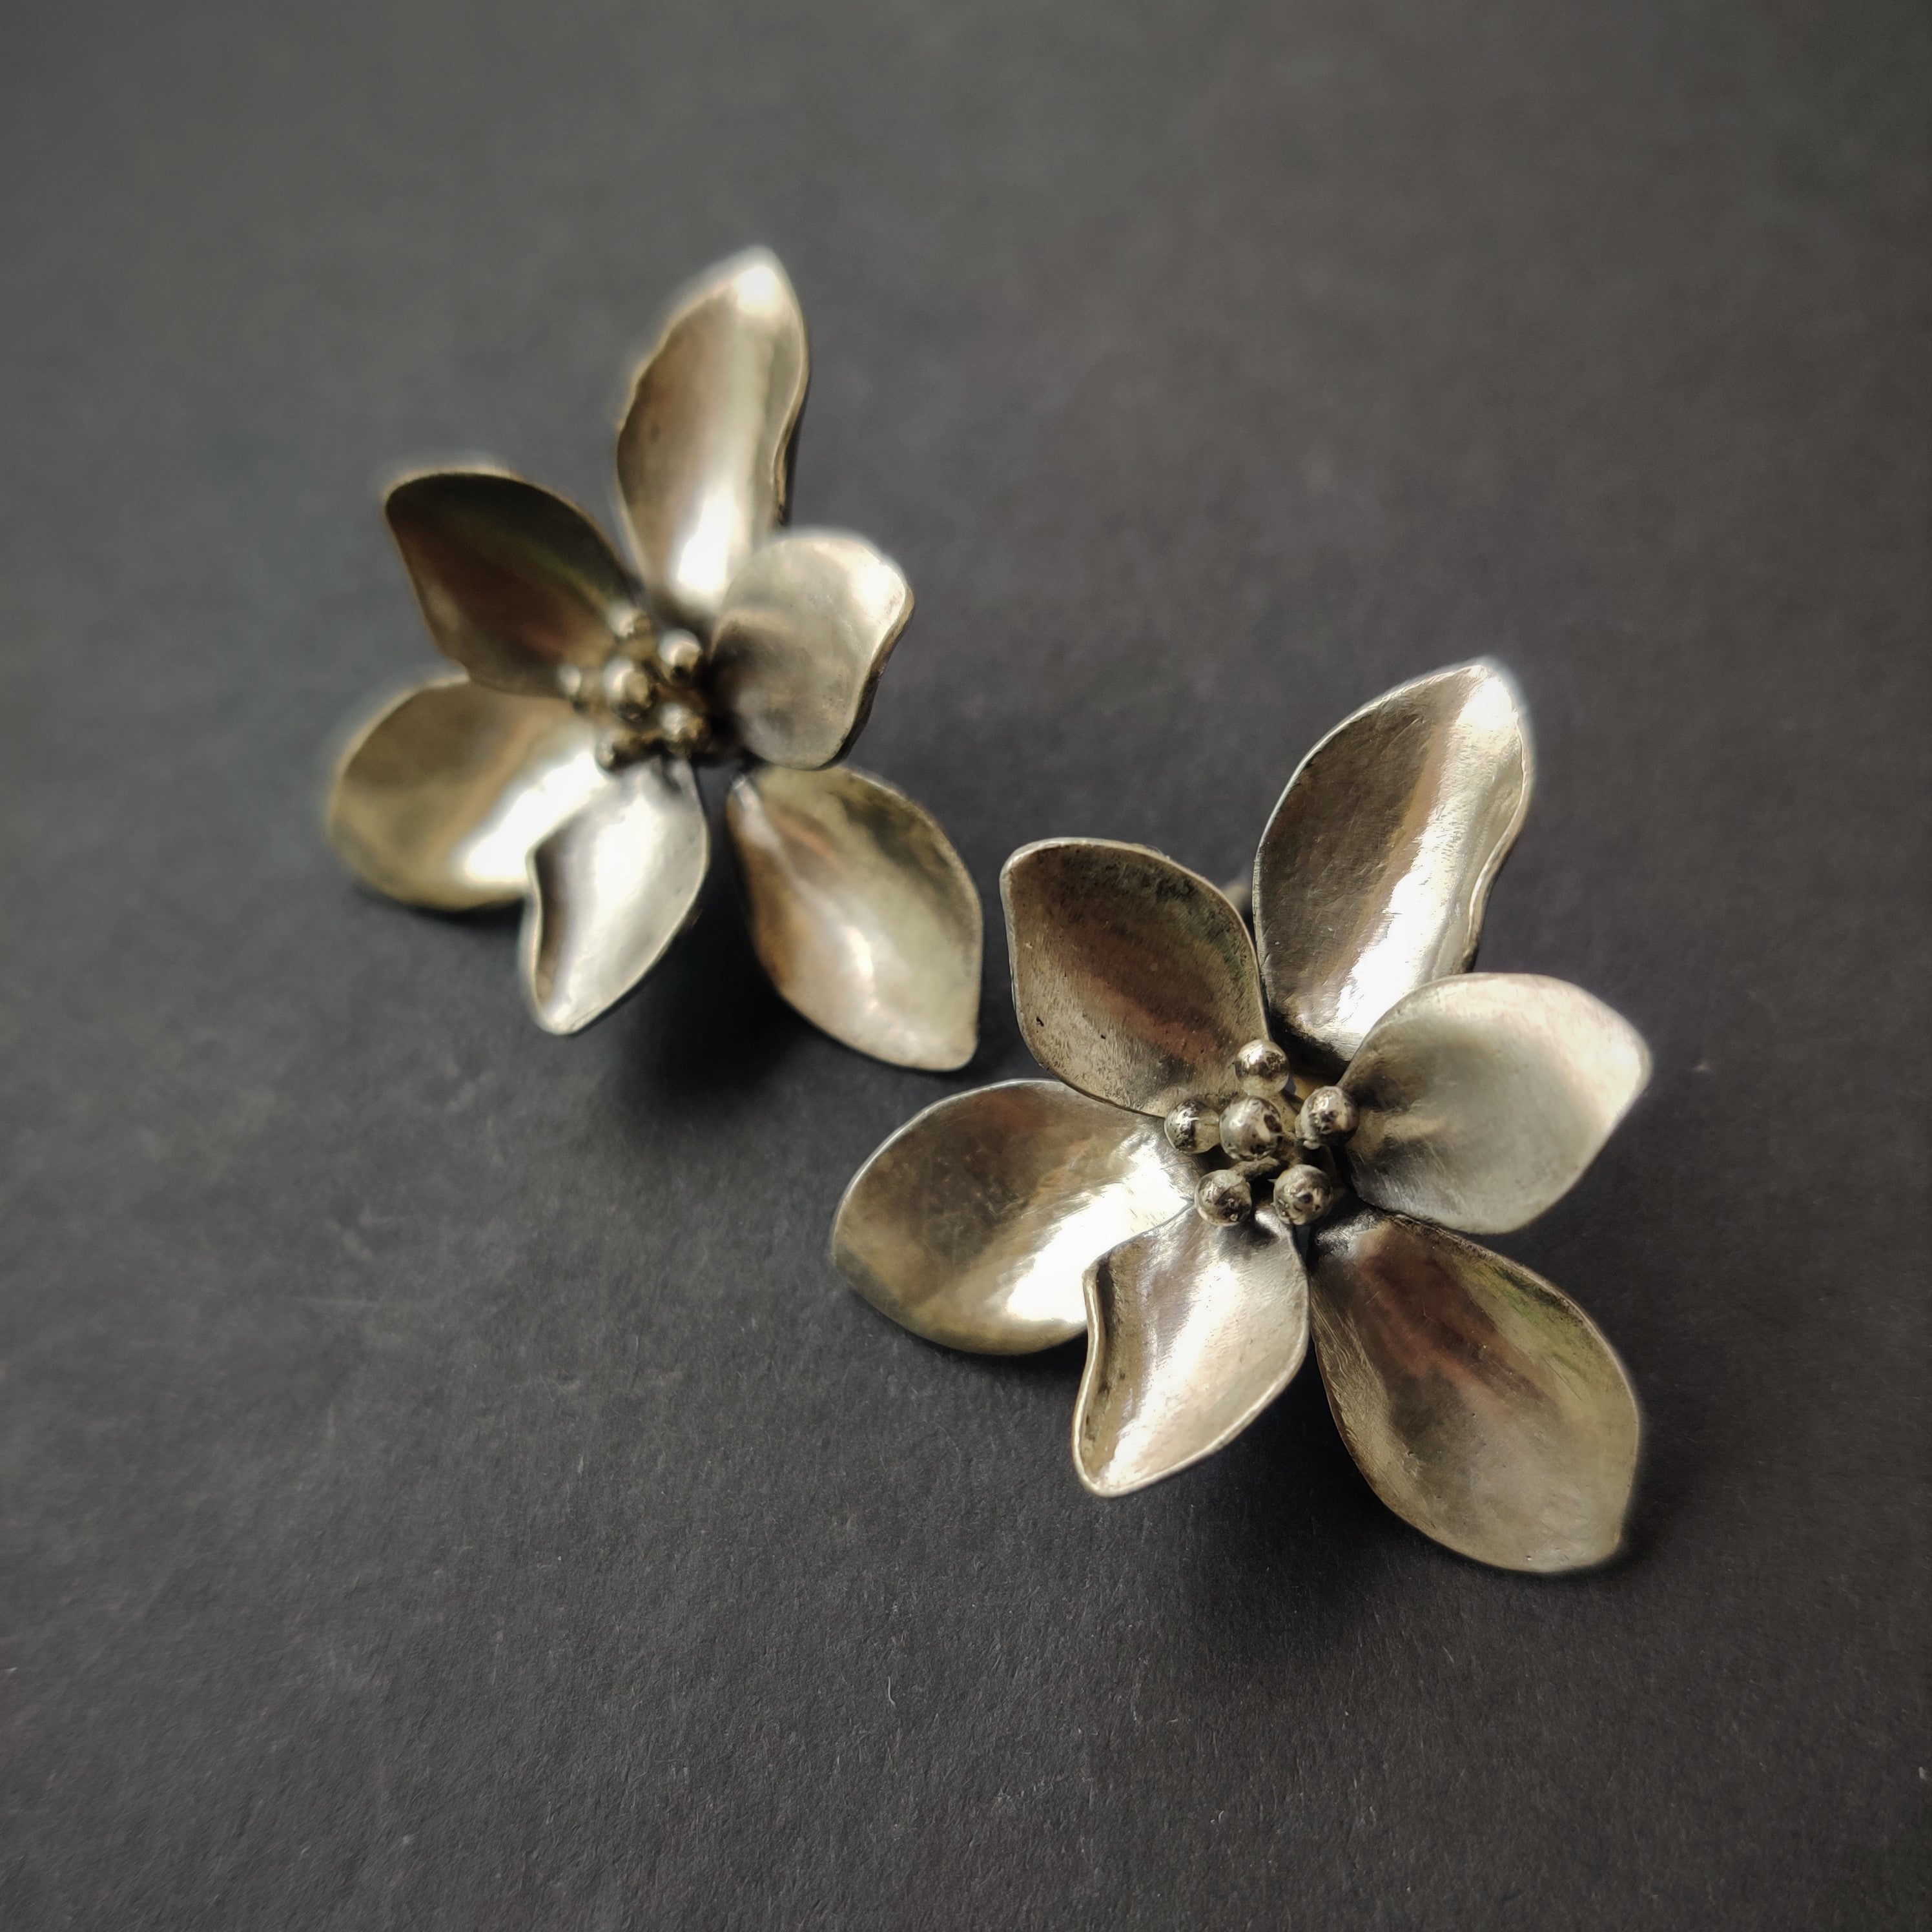 Flower Design Stud Earrings - South India Jewels - Earrings